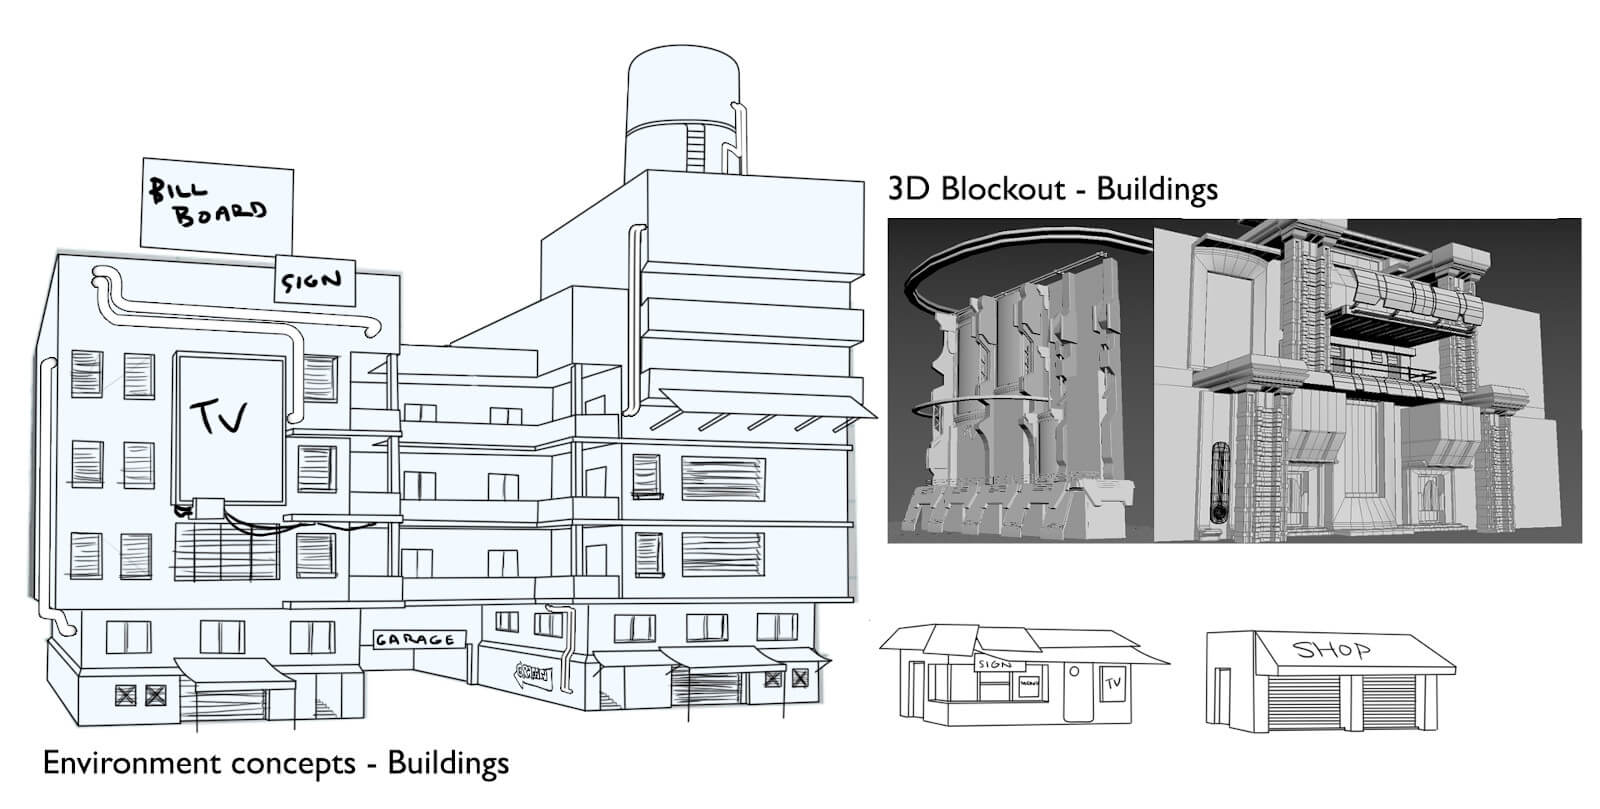 Building concept and 3D blockout art